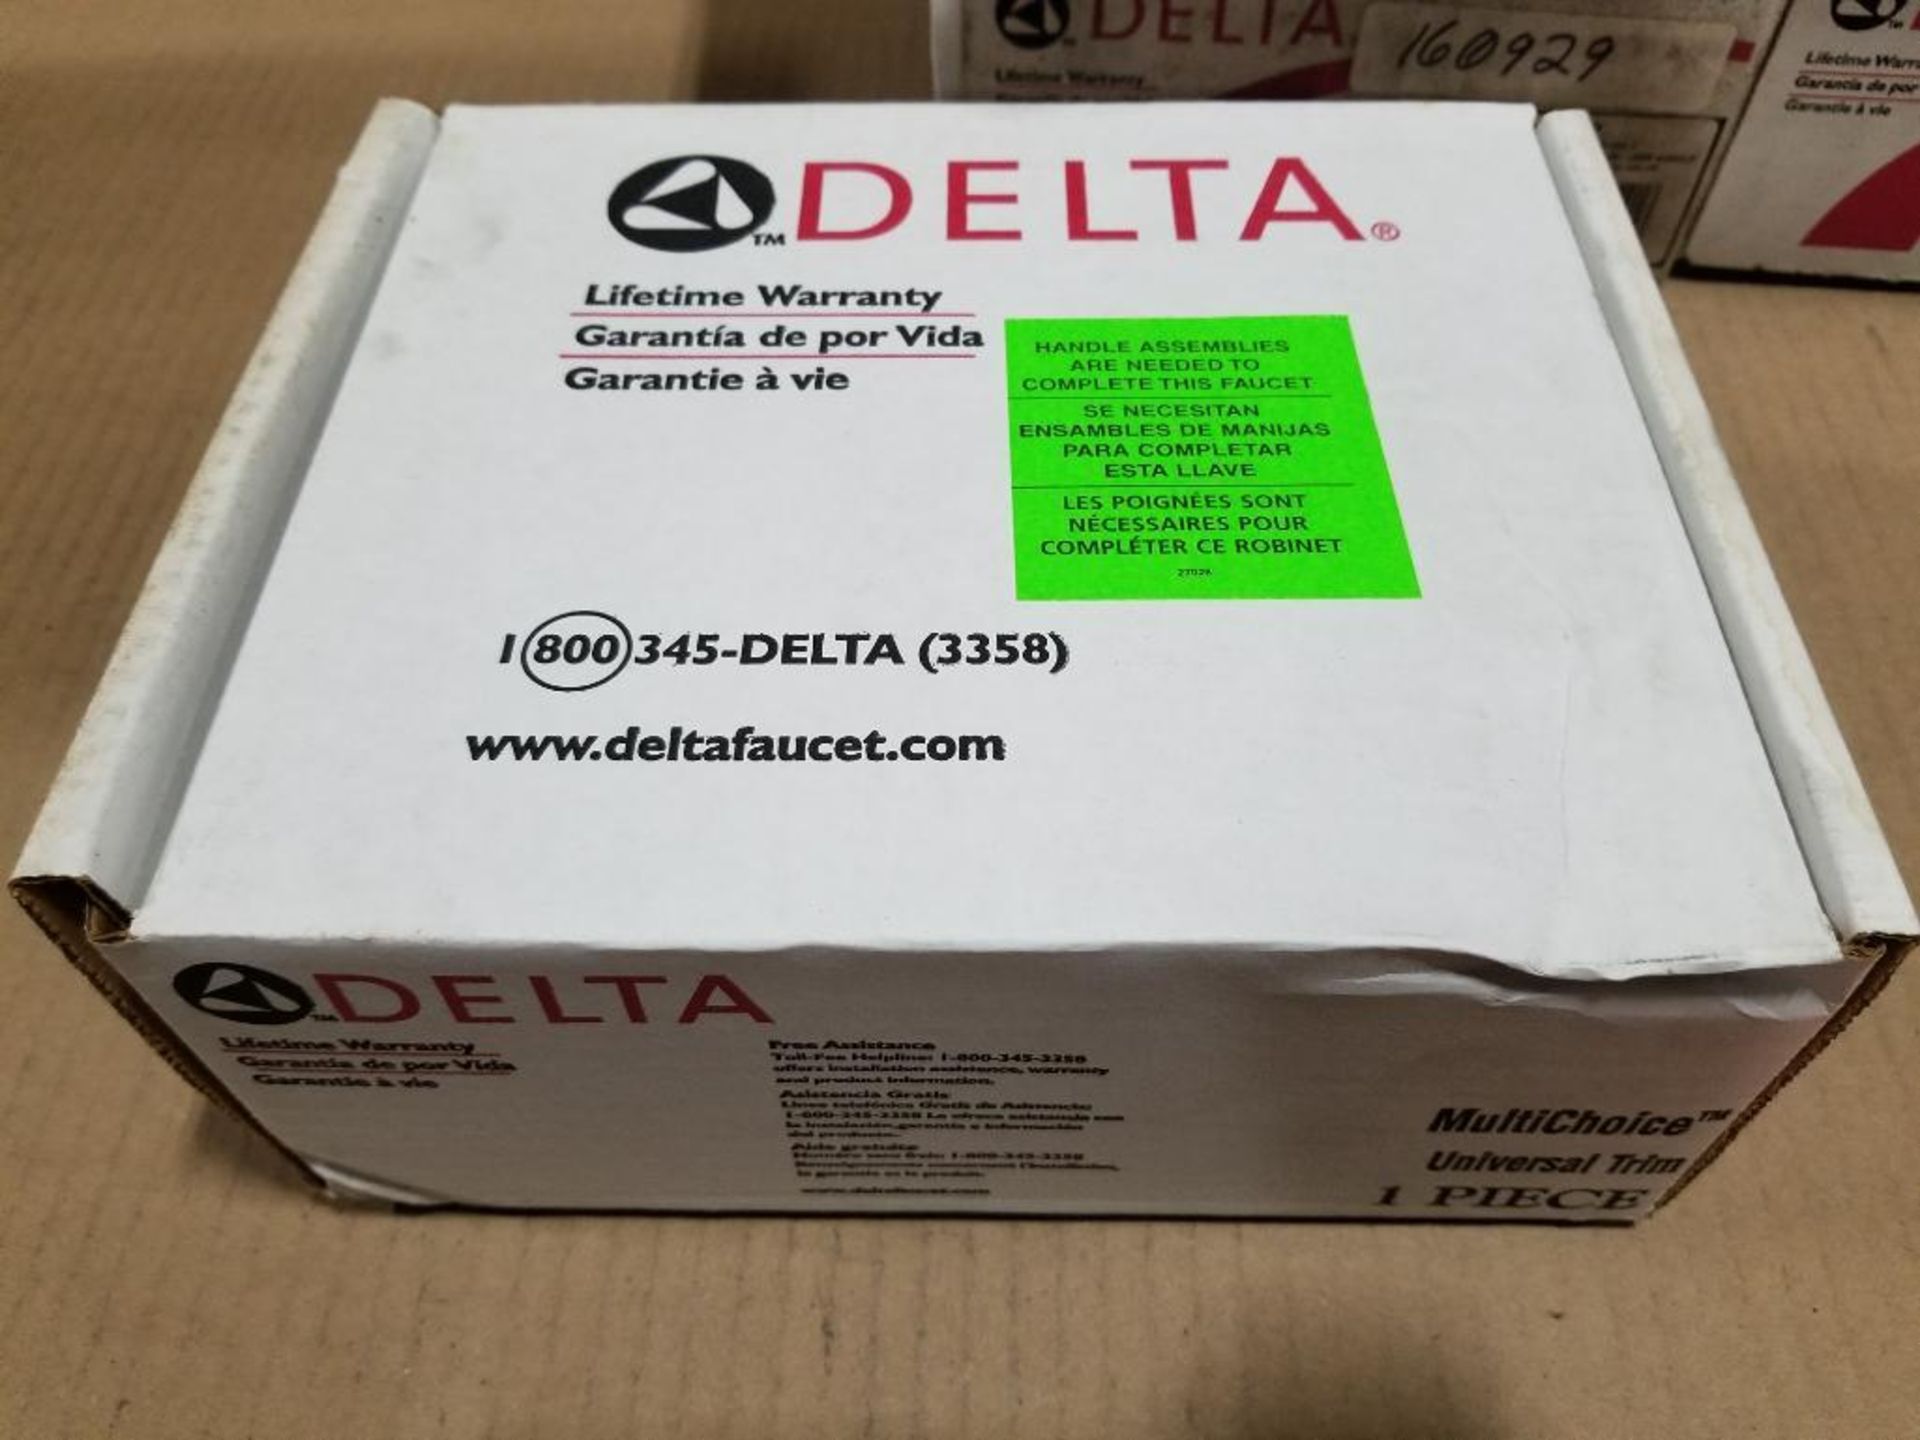 Qty 8 - Delta Faucet 1400 series shower trim kit. Part number T14480-LHP. - Image 5 of 7